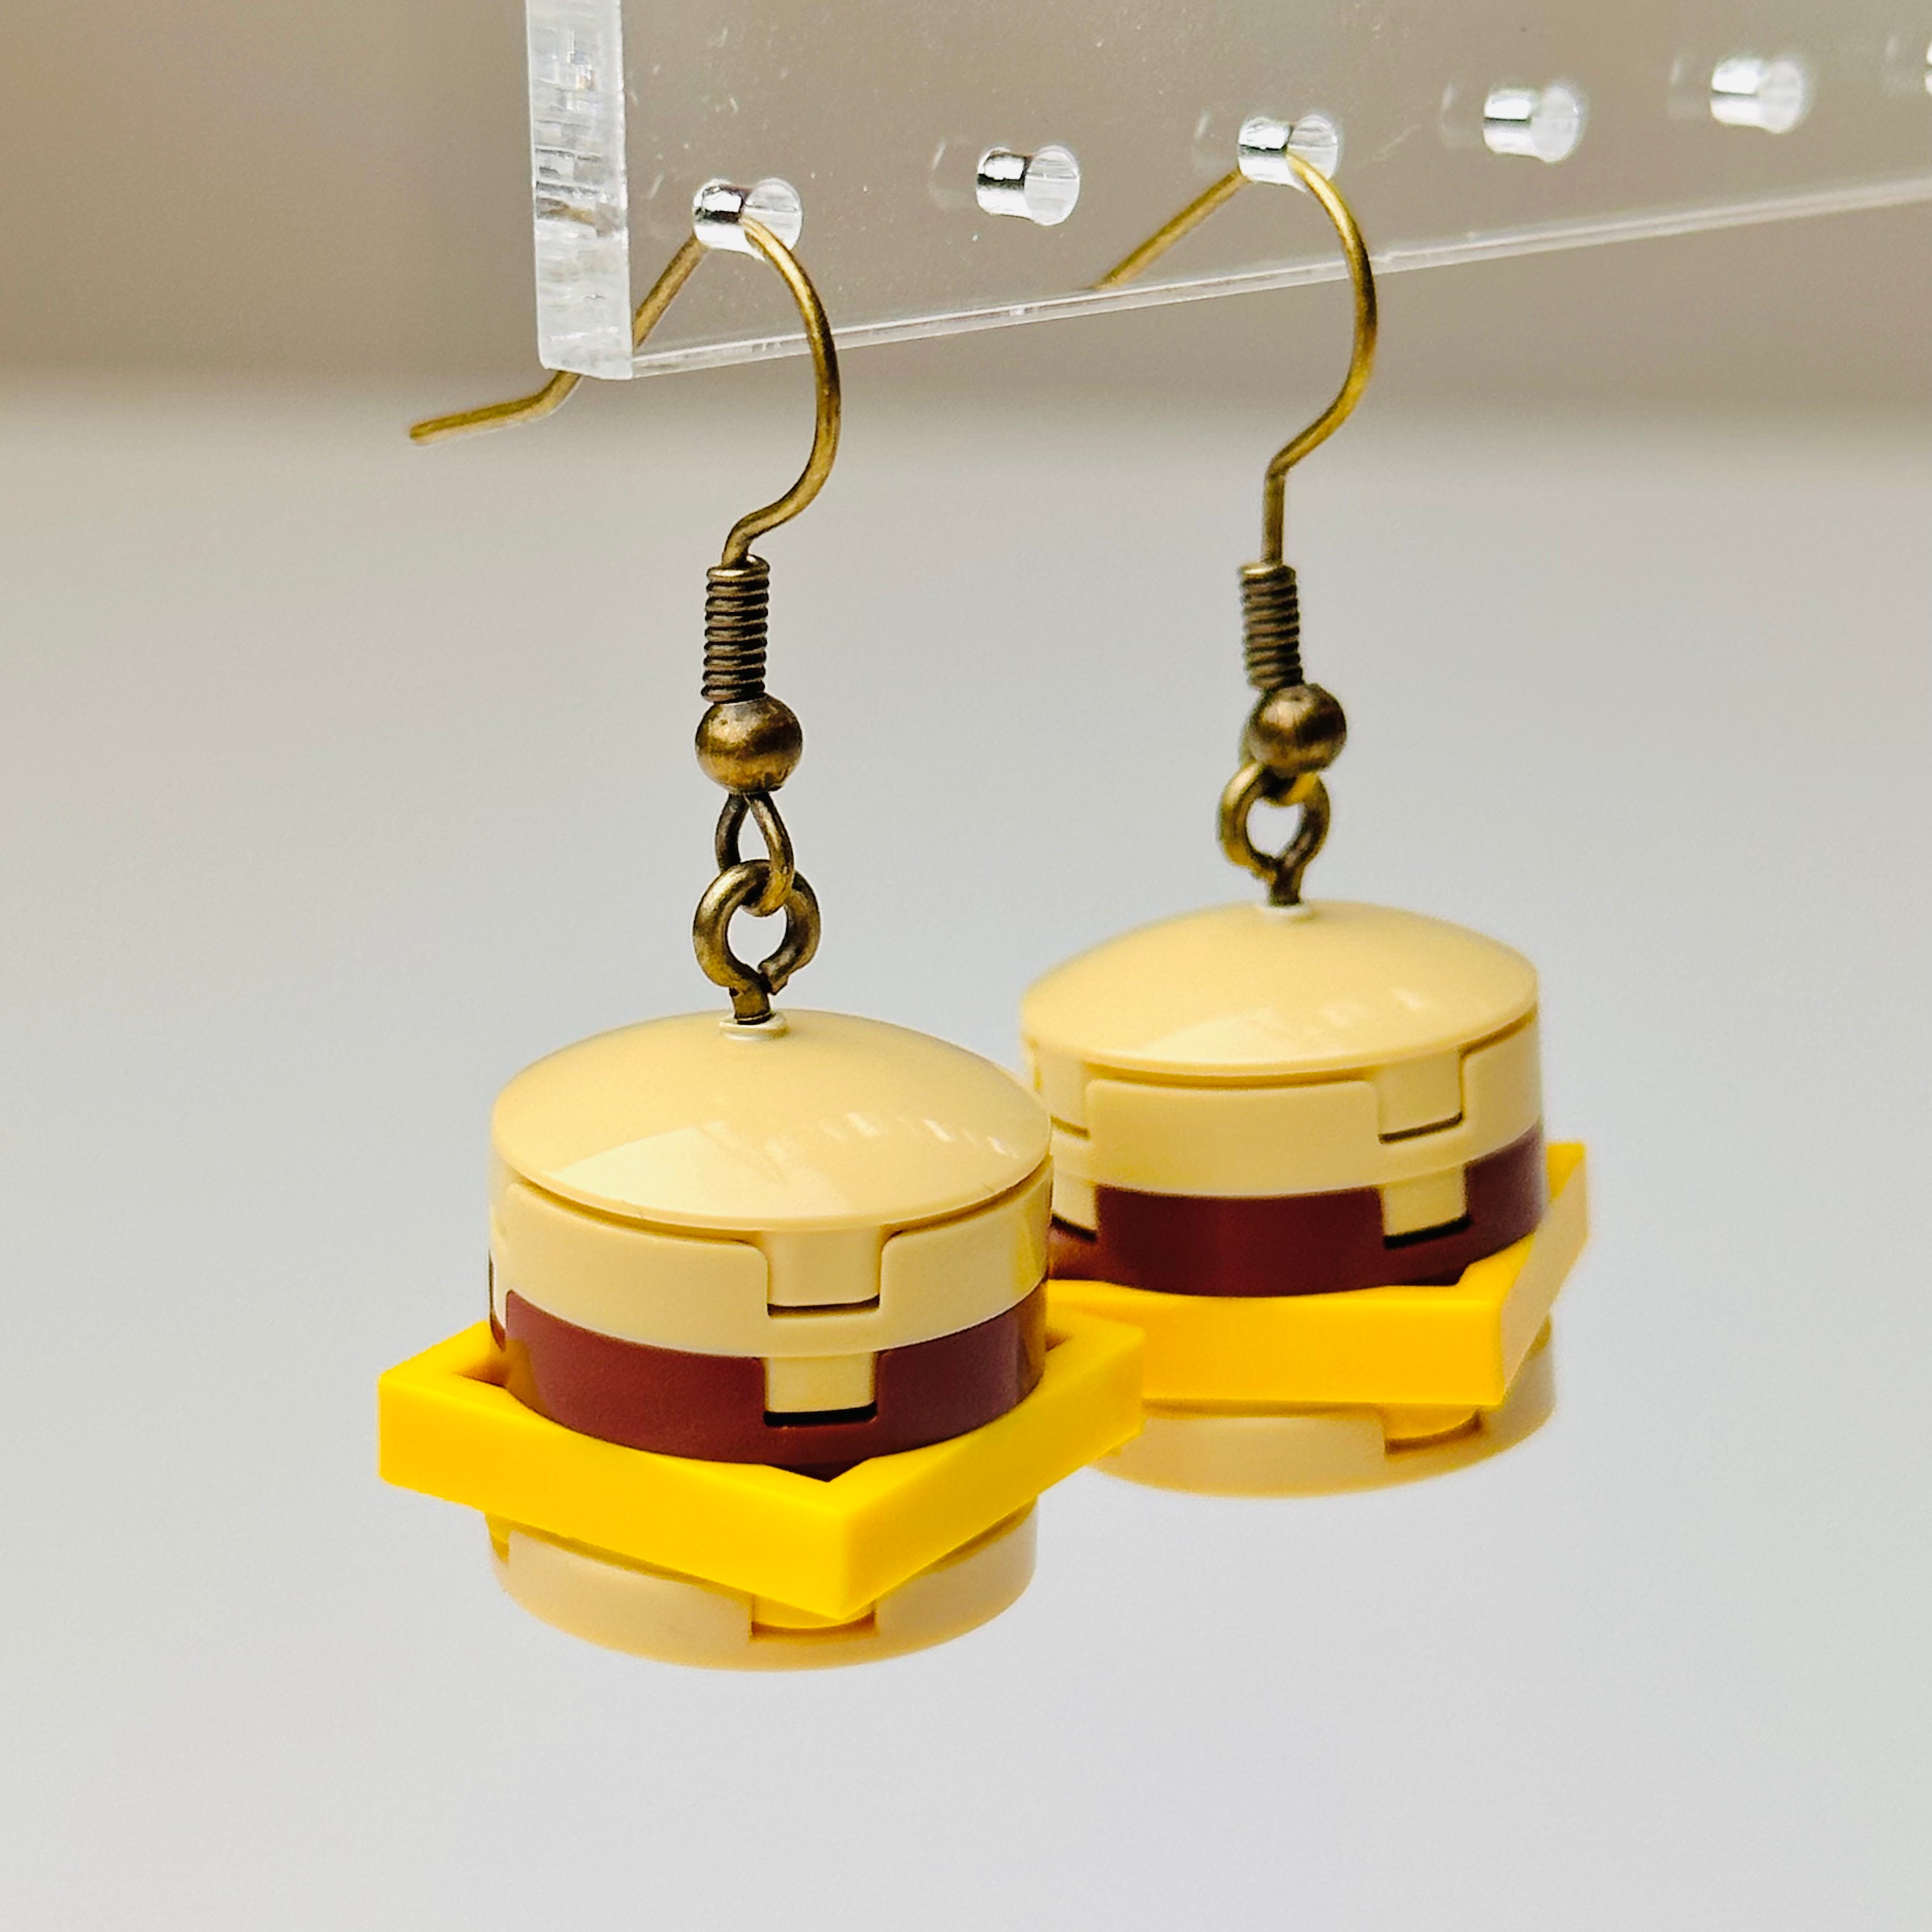 Cheesy Cheeseburger Brick Built Funny Food Earrings, Handmade with Lego®